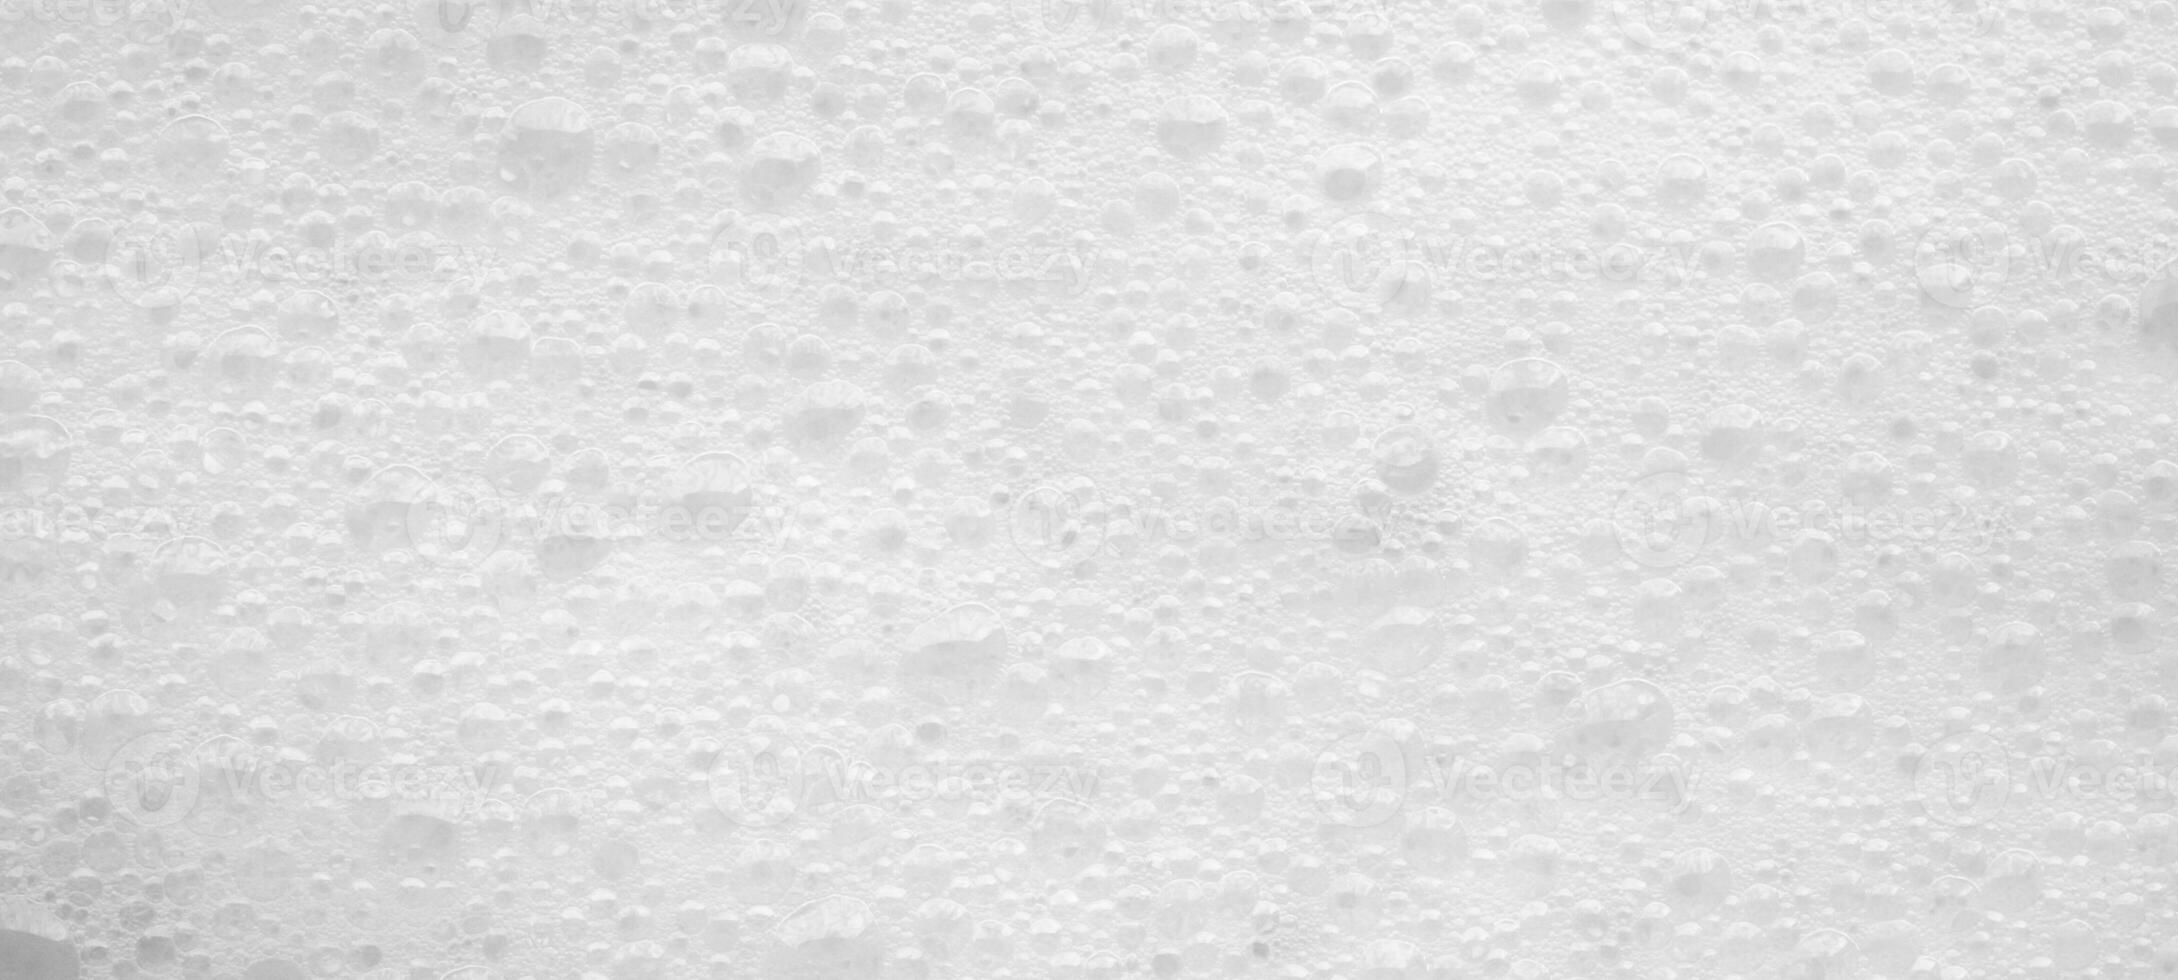 abstrato branco Sabonete espuma bolhas textura fundo foto